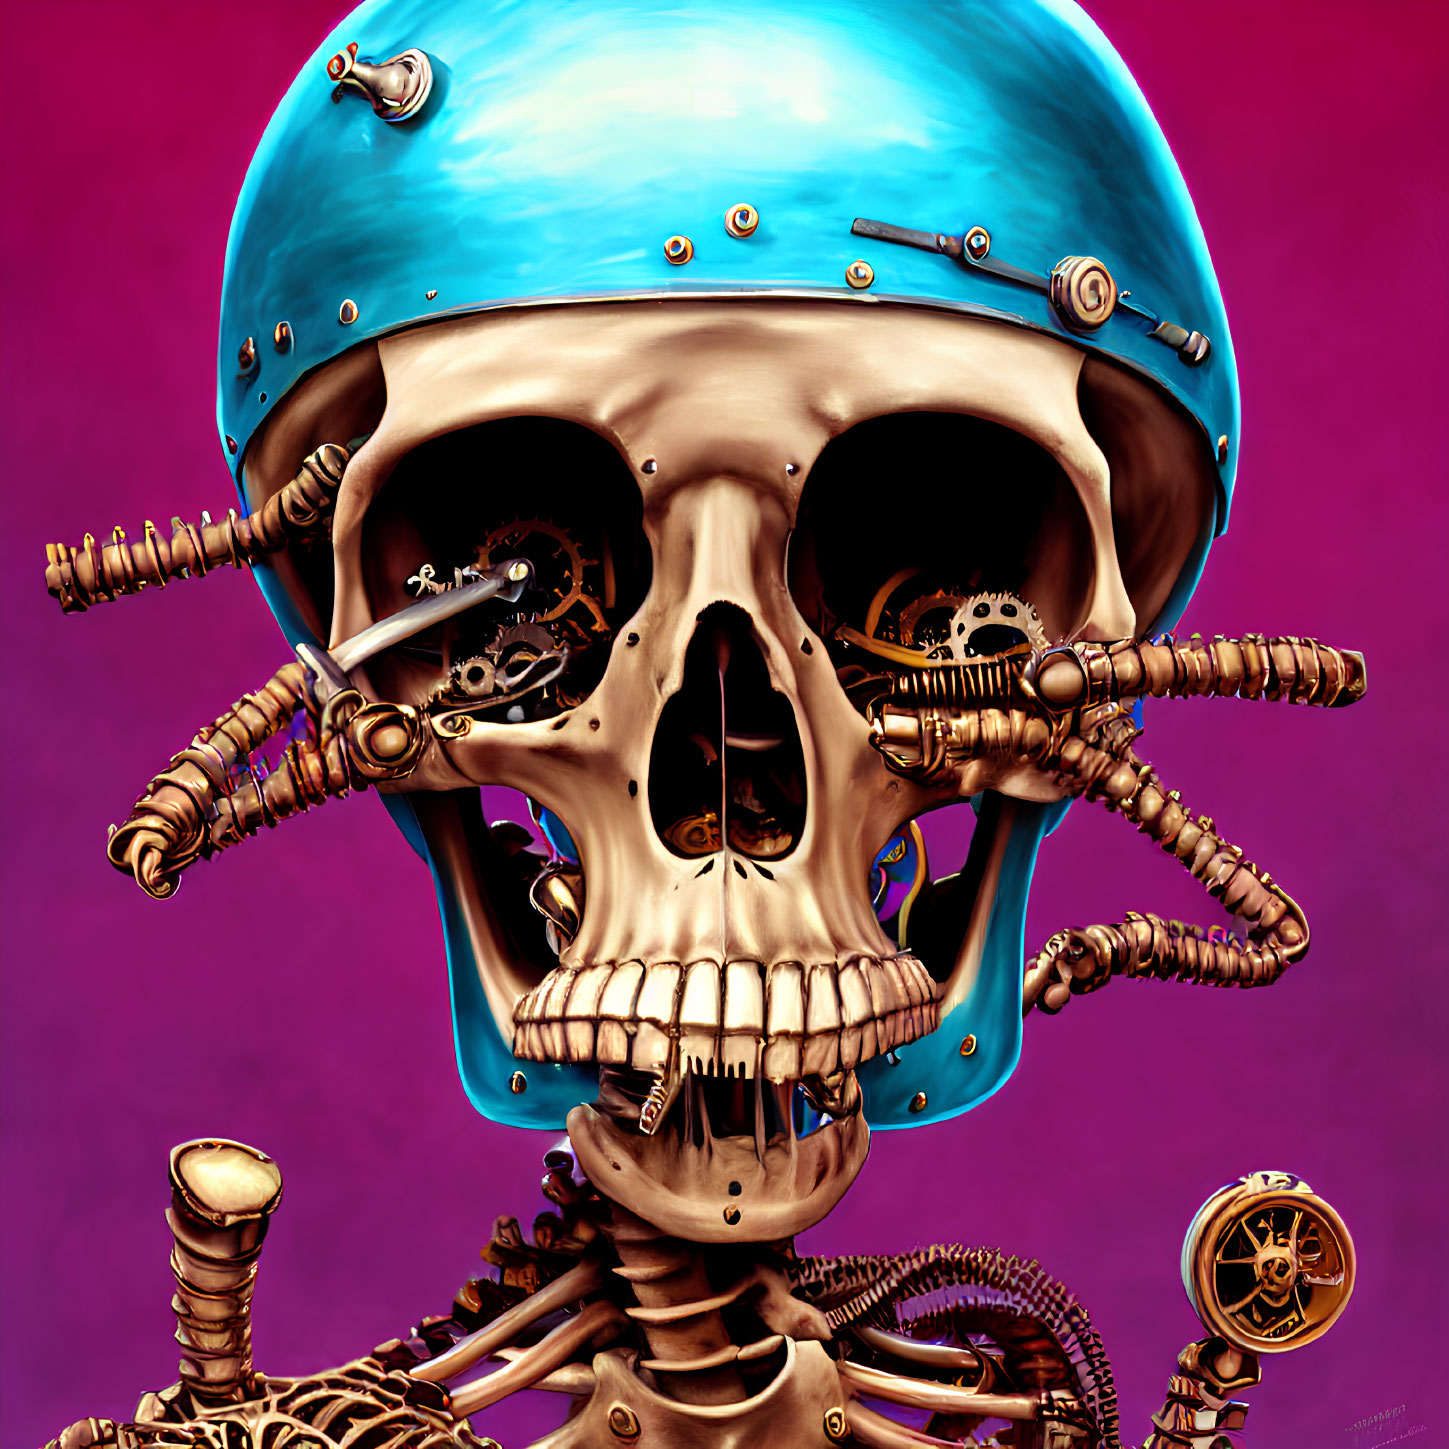 Illustration of skeletal figure with metallic tendrils, blue helmet, pink background.